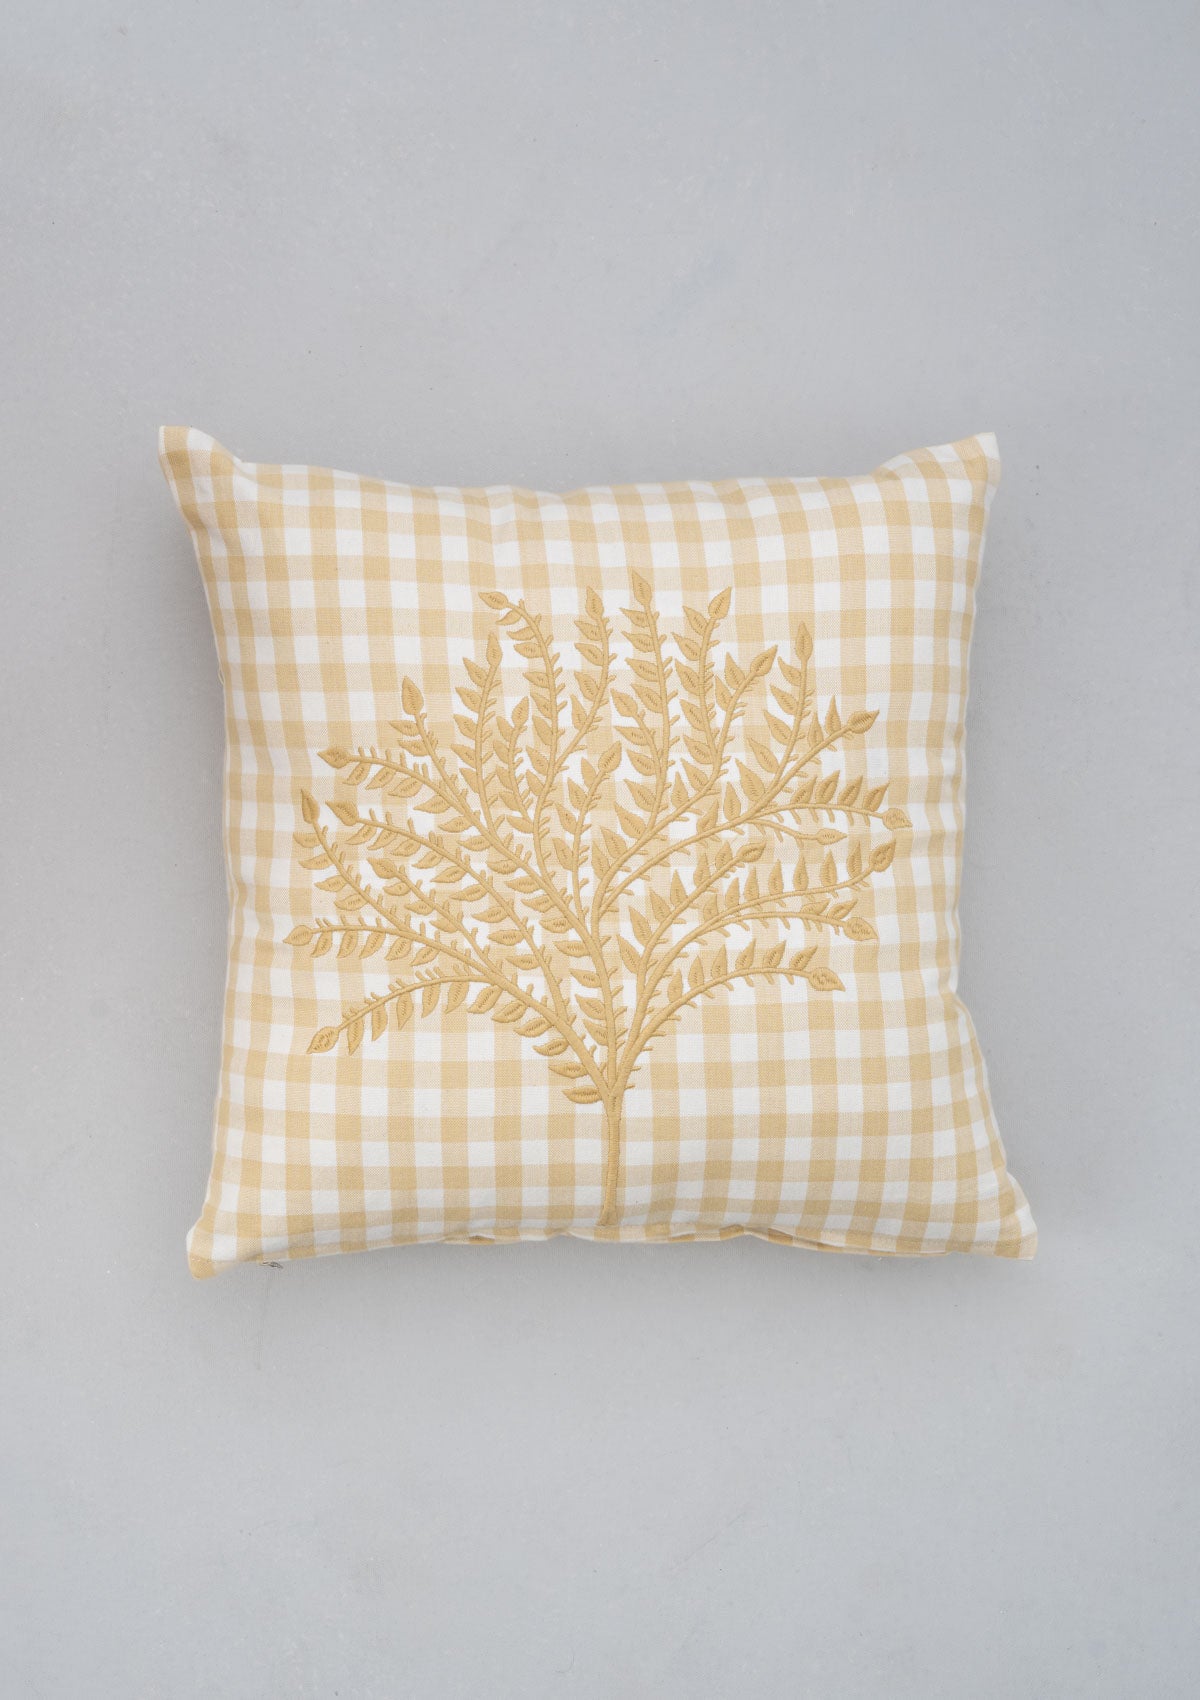 Calicut 100% cotton embroidered decorative cushion cover for sofa - Ivory